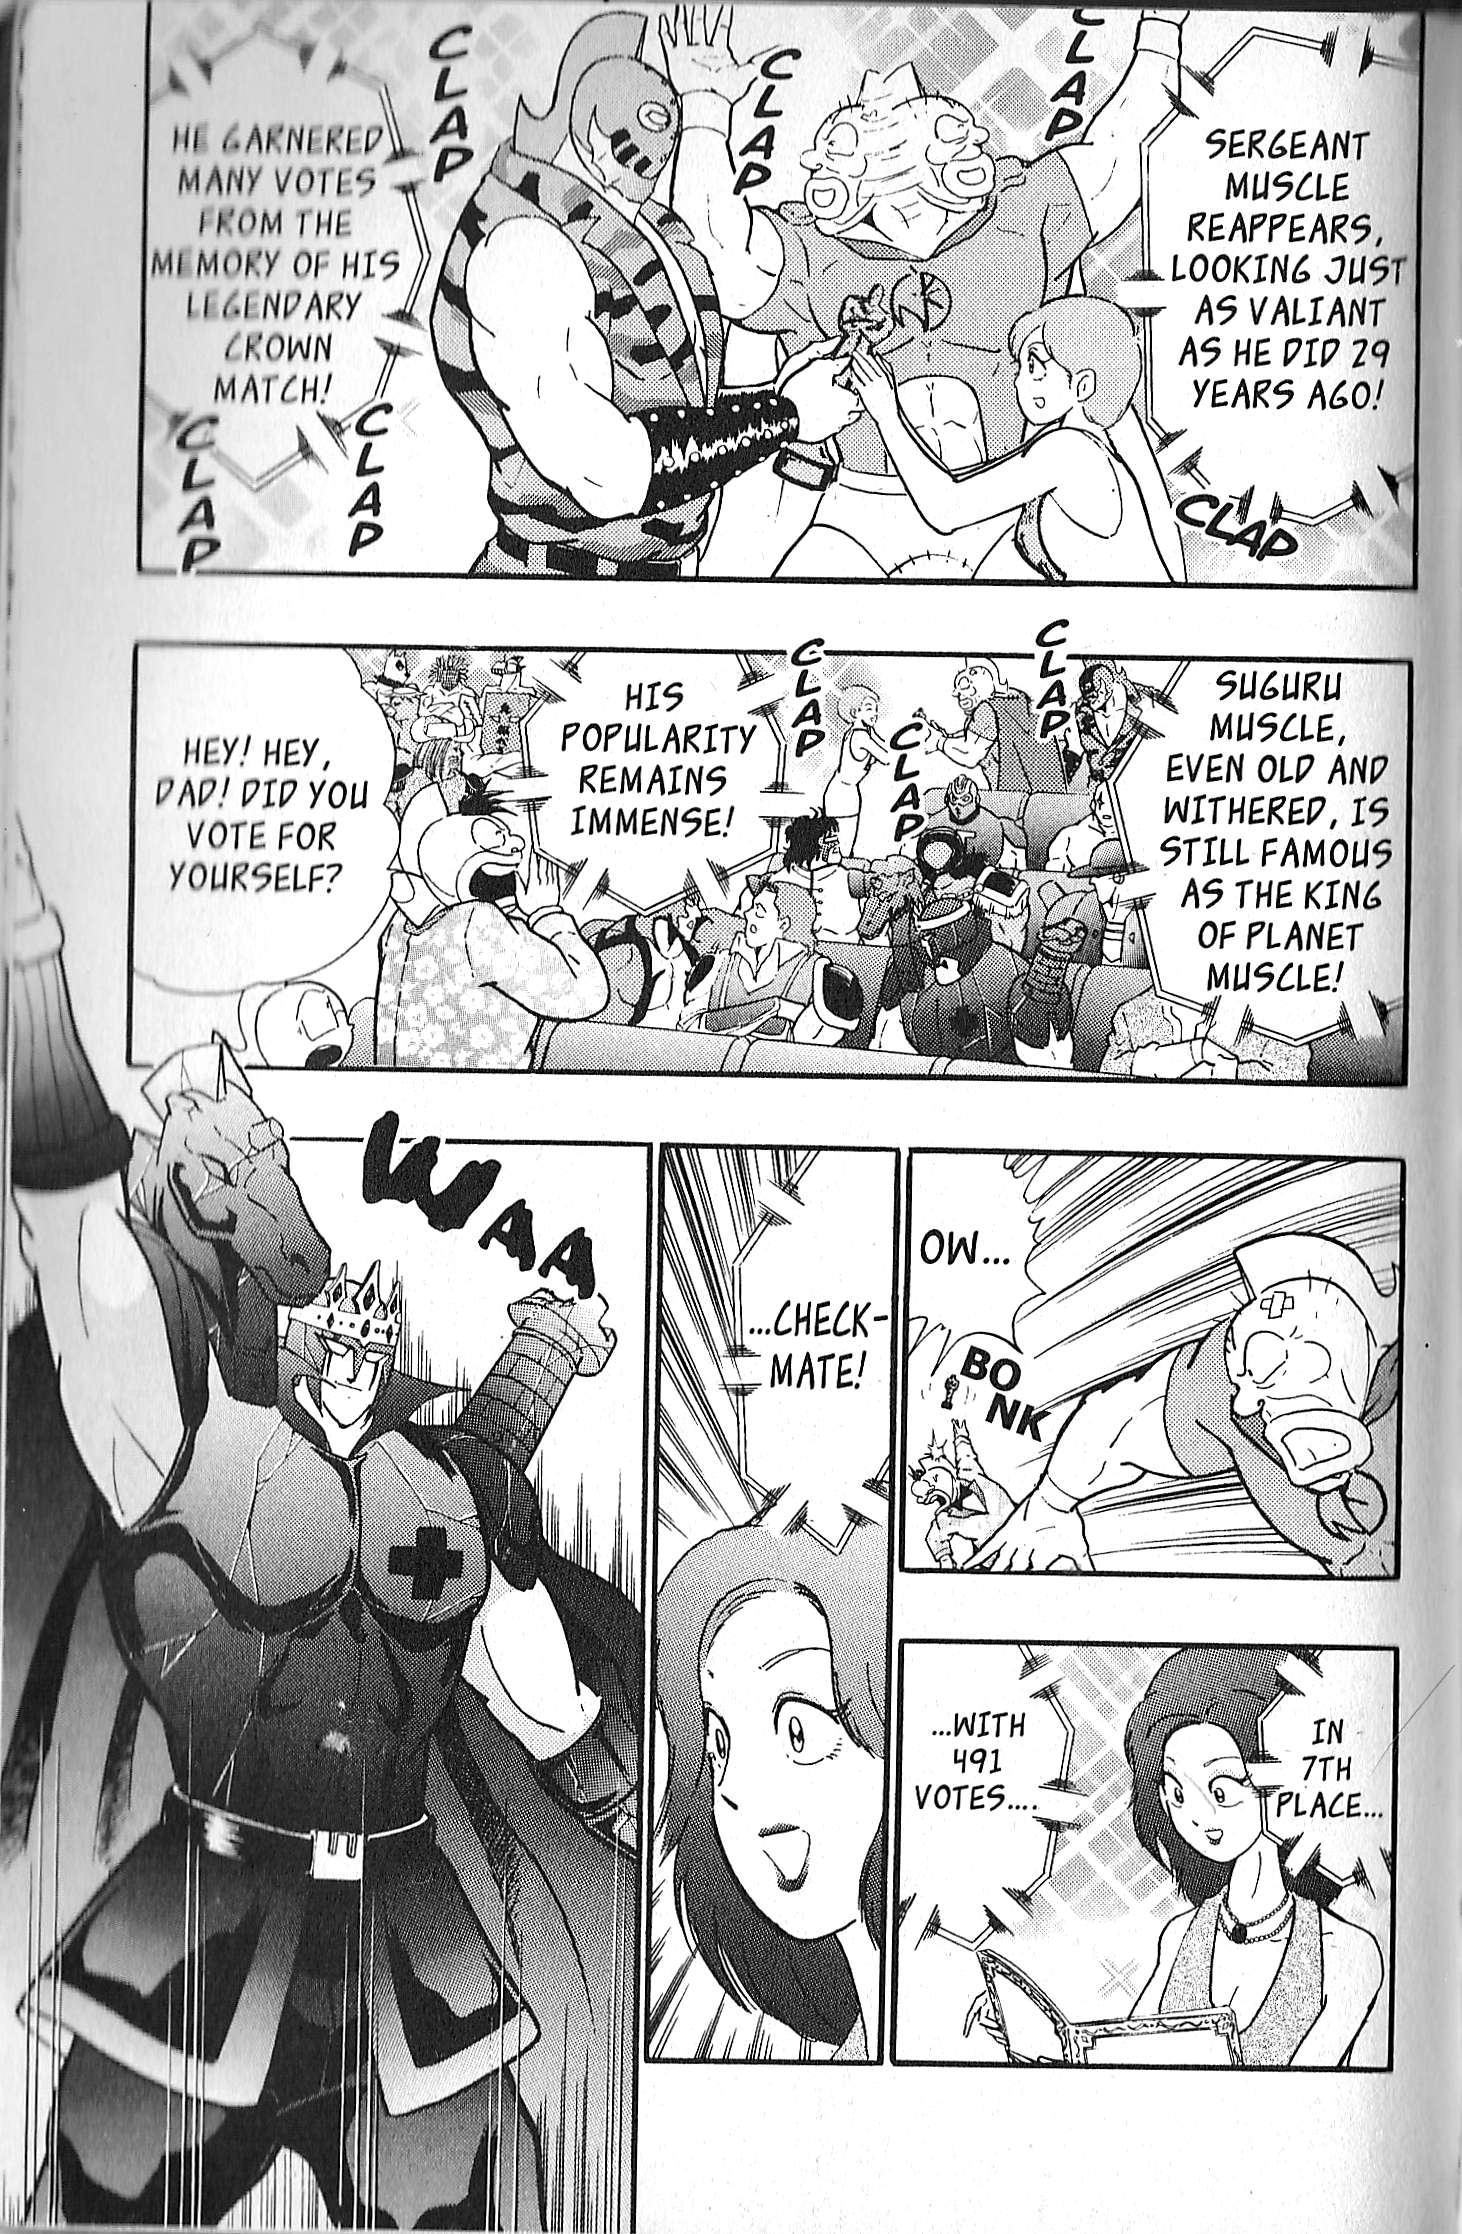 Kinnikuman II Sei - 2nd Generation - chapter 106.5 - #5